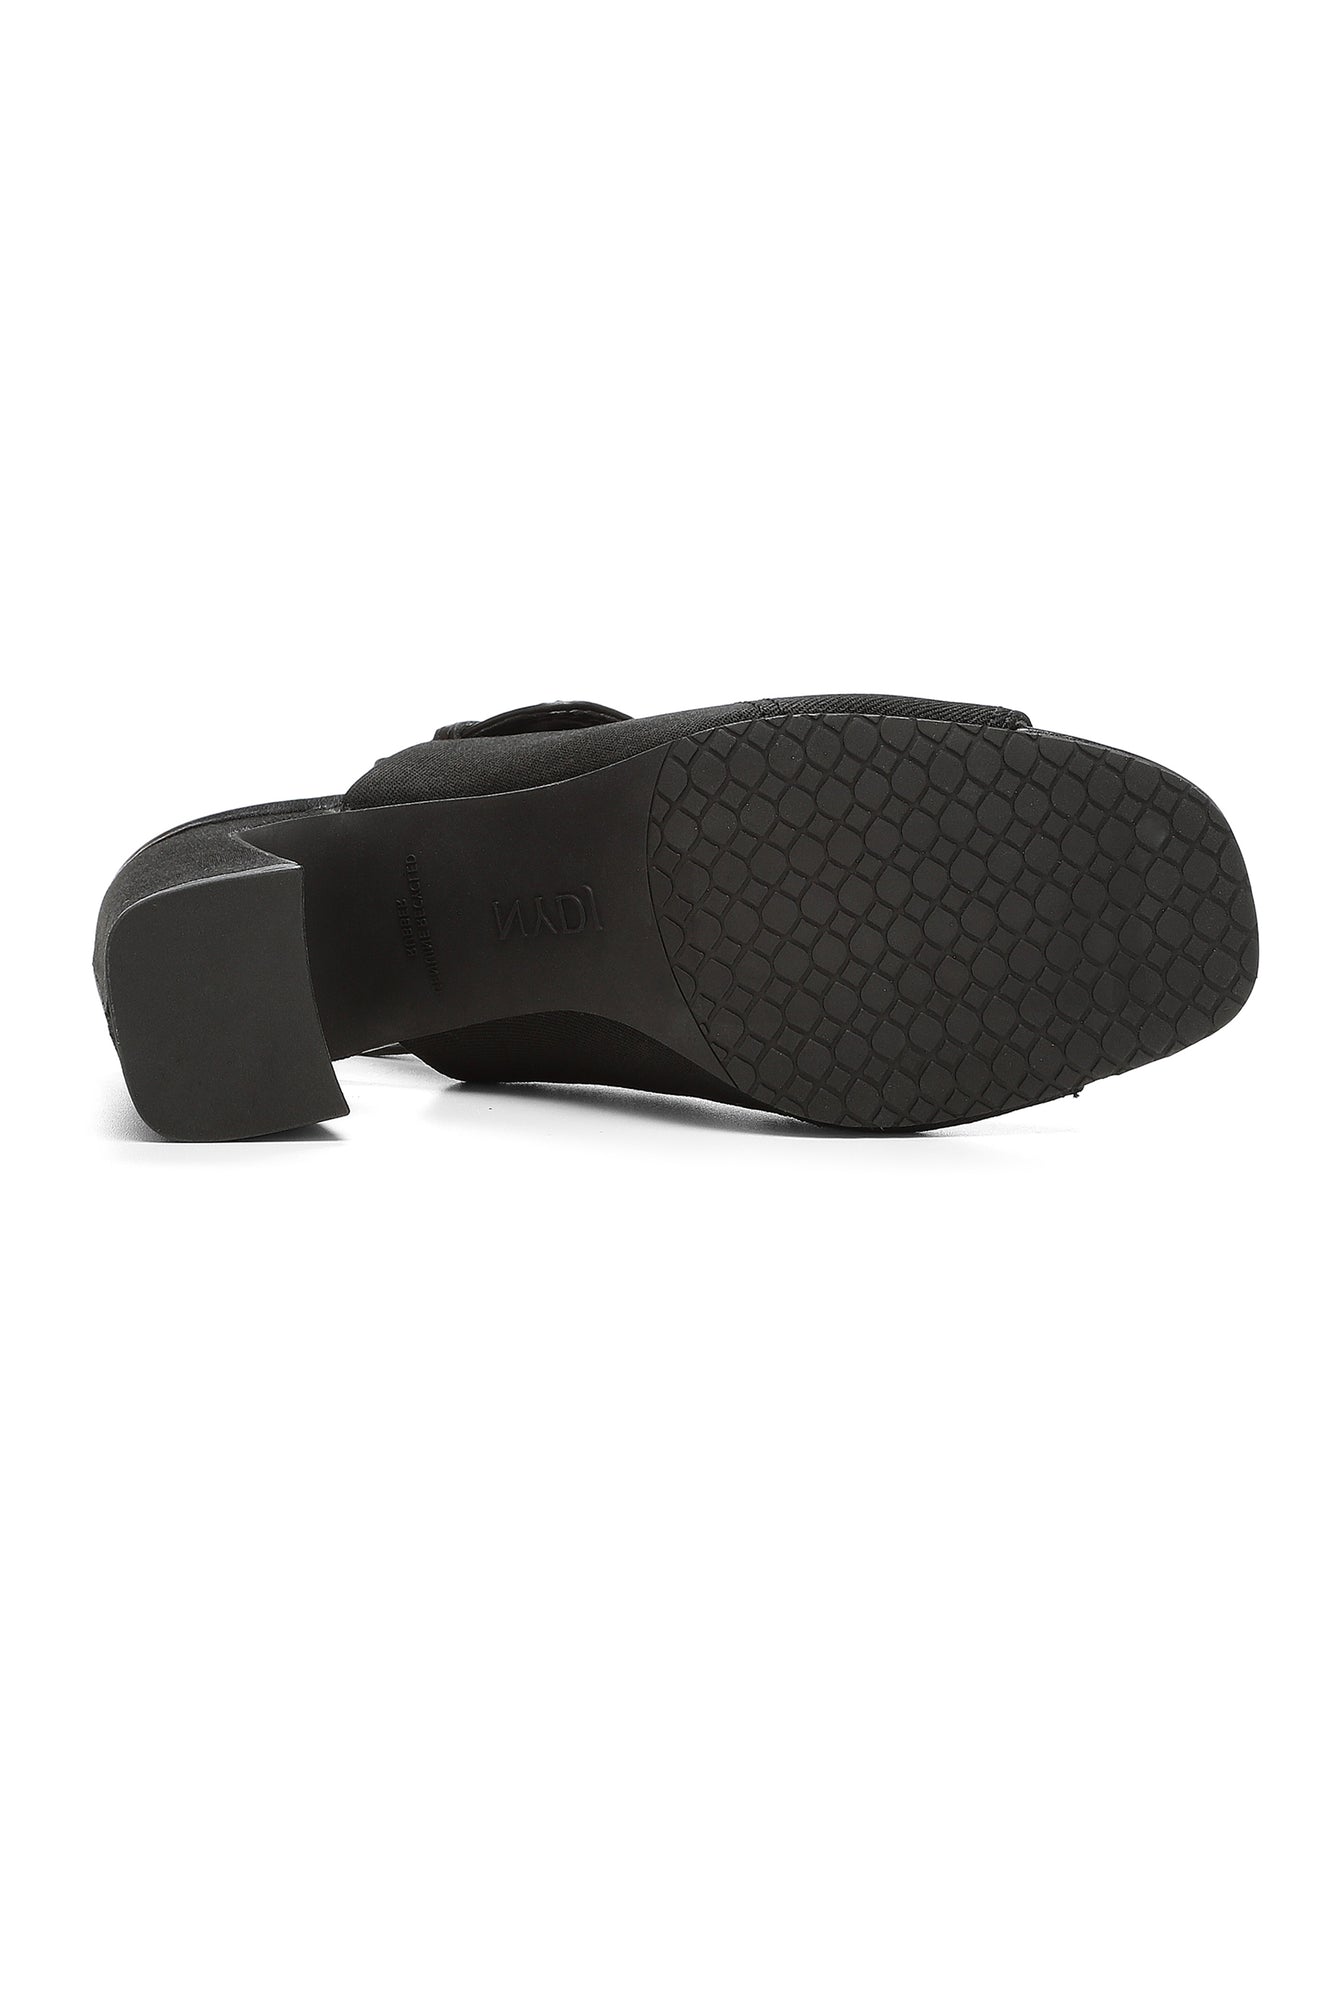 NYDJ Lyssa Block Heel Sandals In BlackLast™ Denim - Black